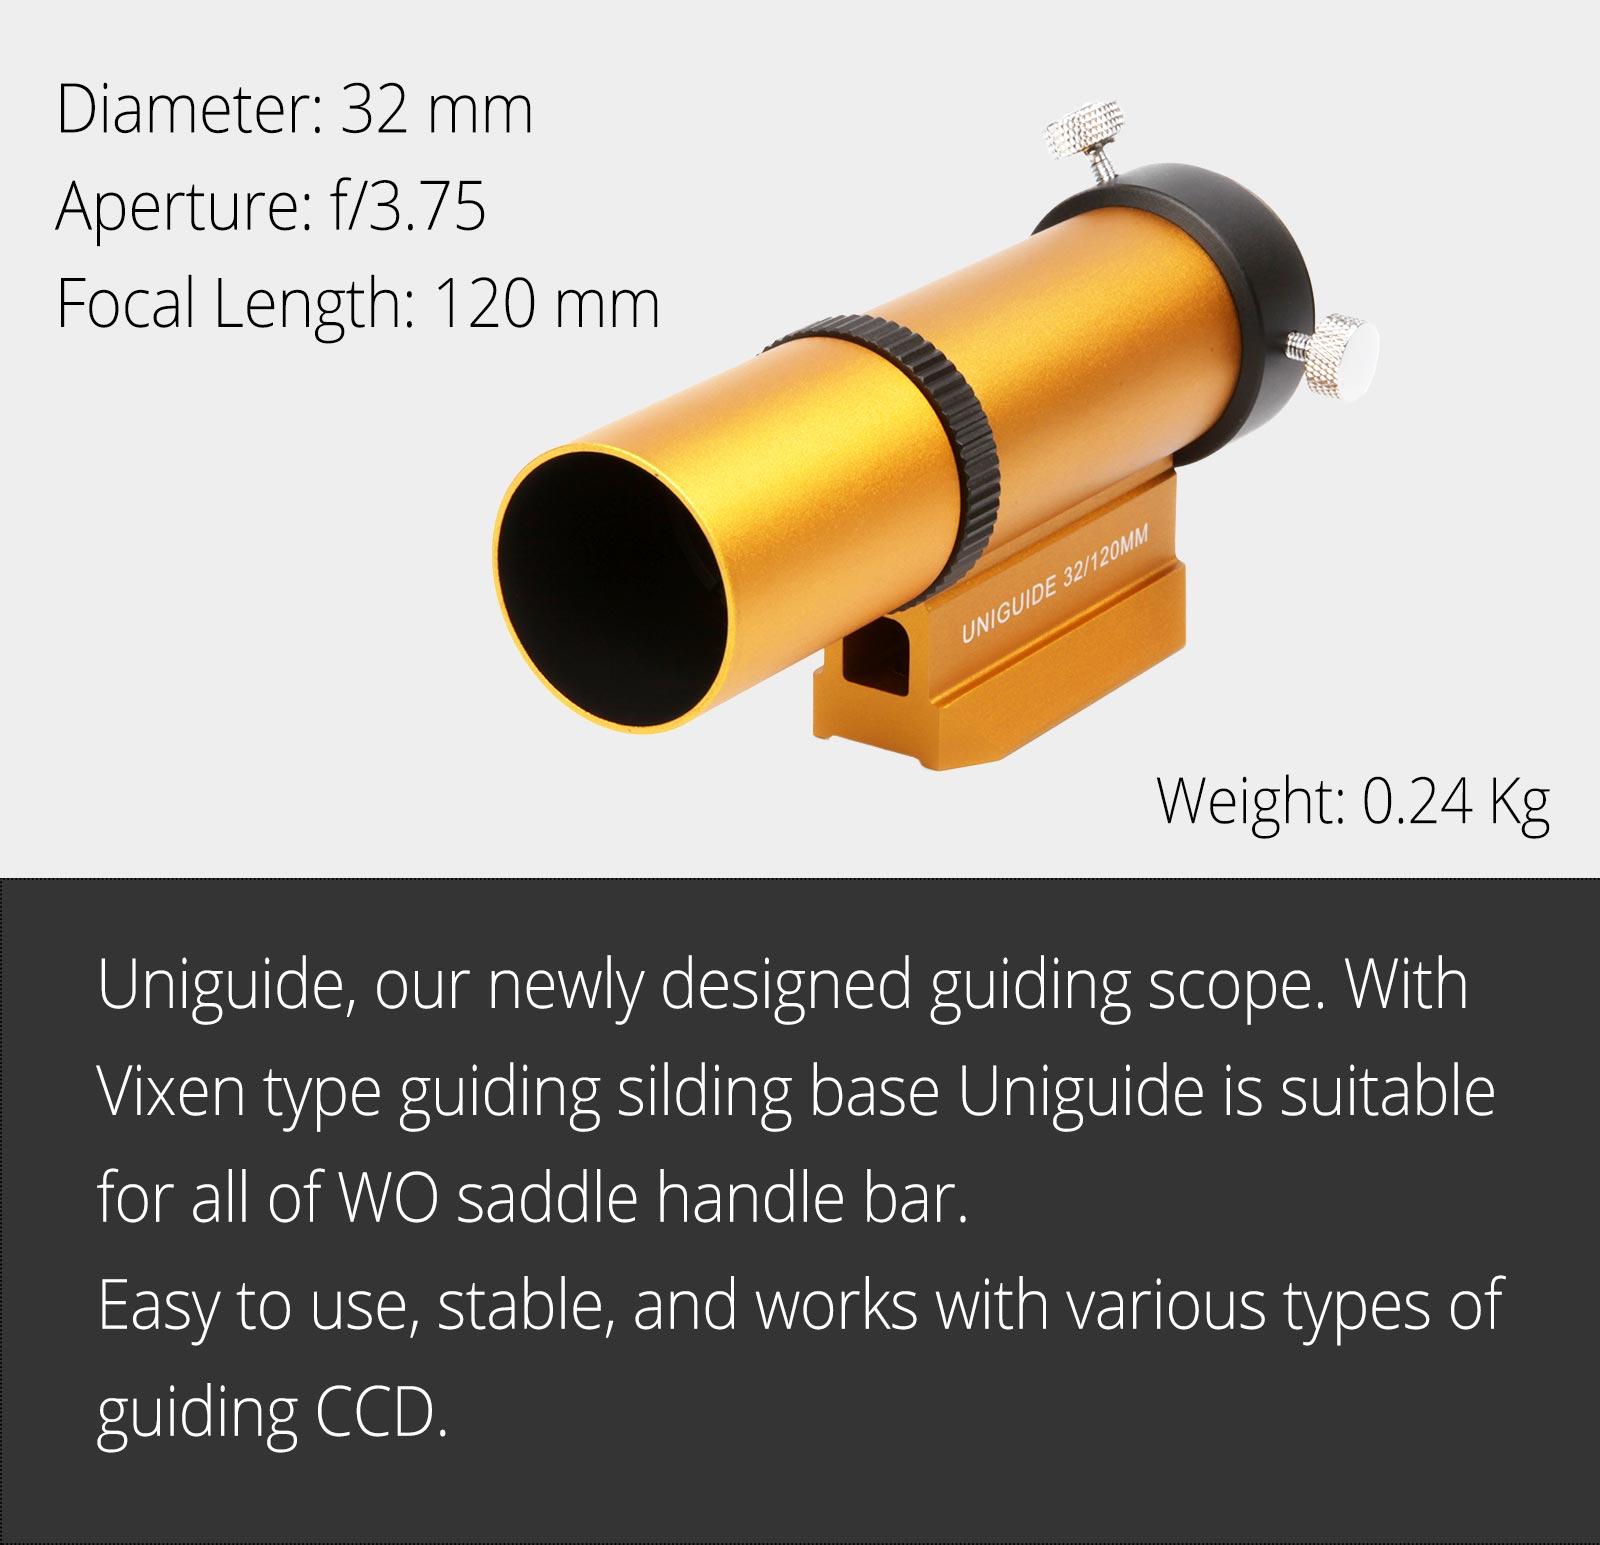 William Optics Slide-base UniGuide 32mm Guidescope Specifications